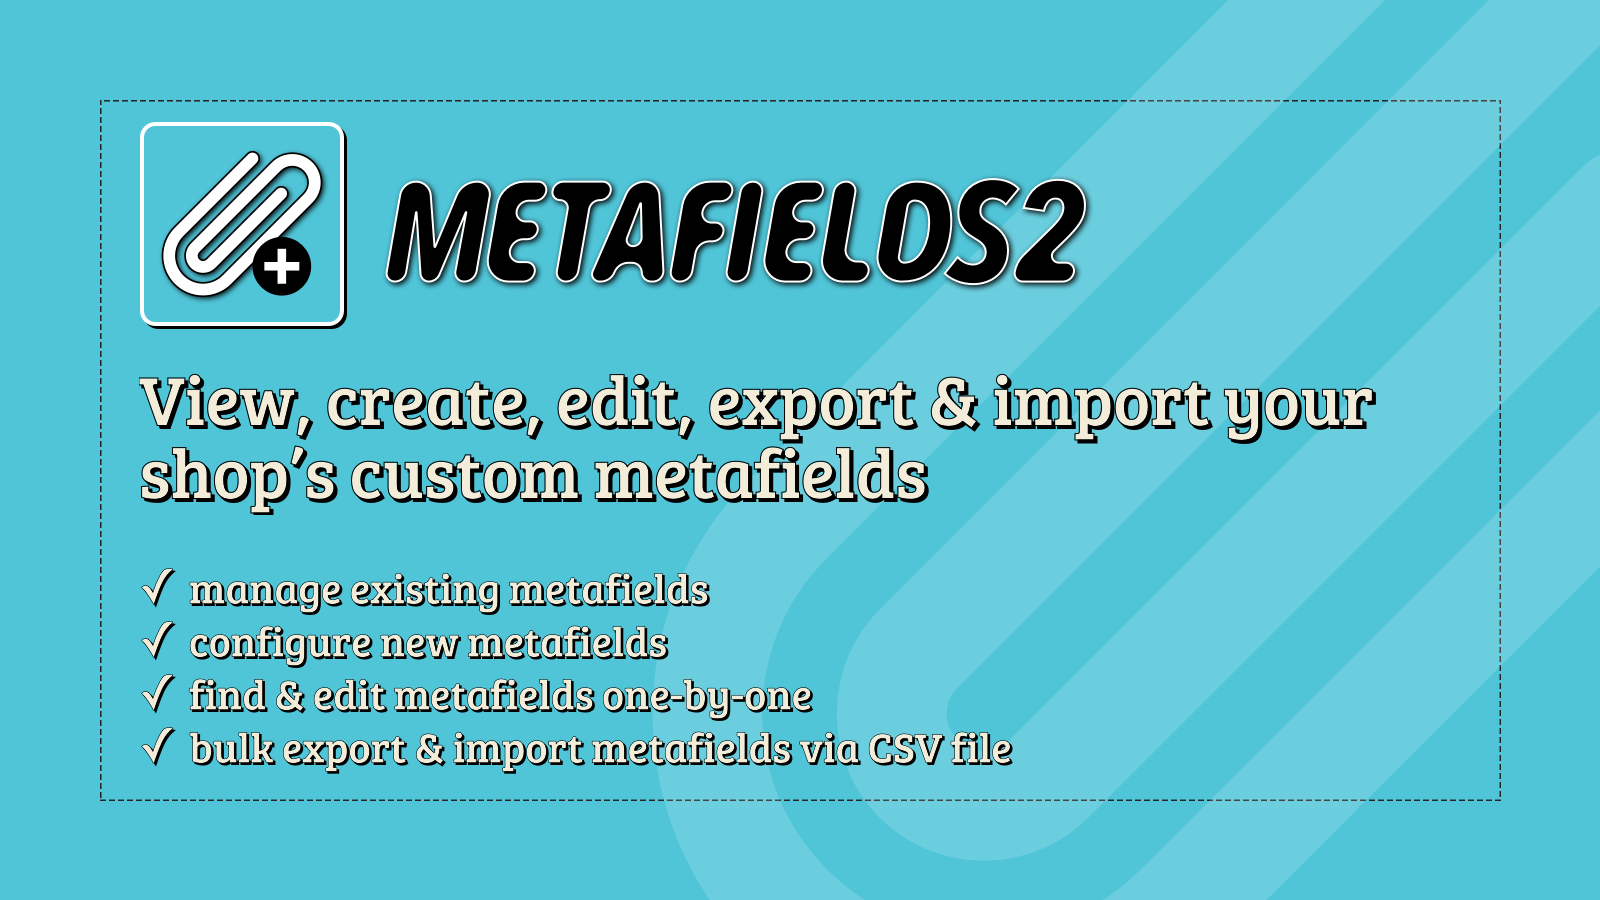 Metafields2 - Crea, edita, exporta/importa tus metafields personalizados